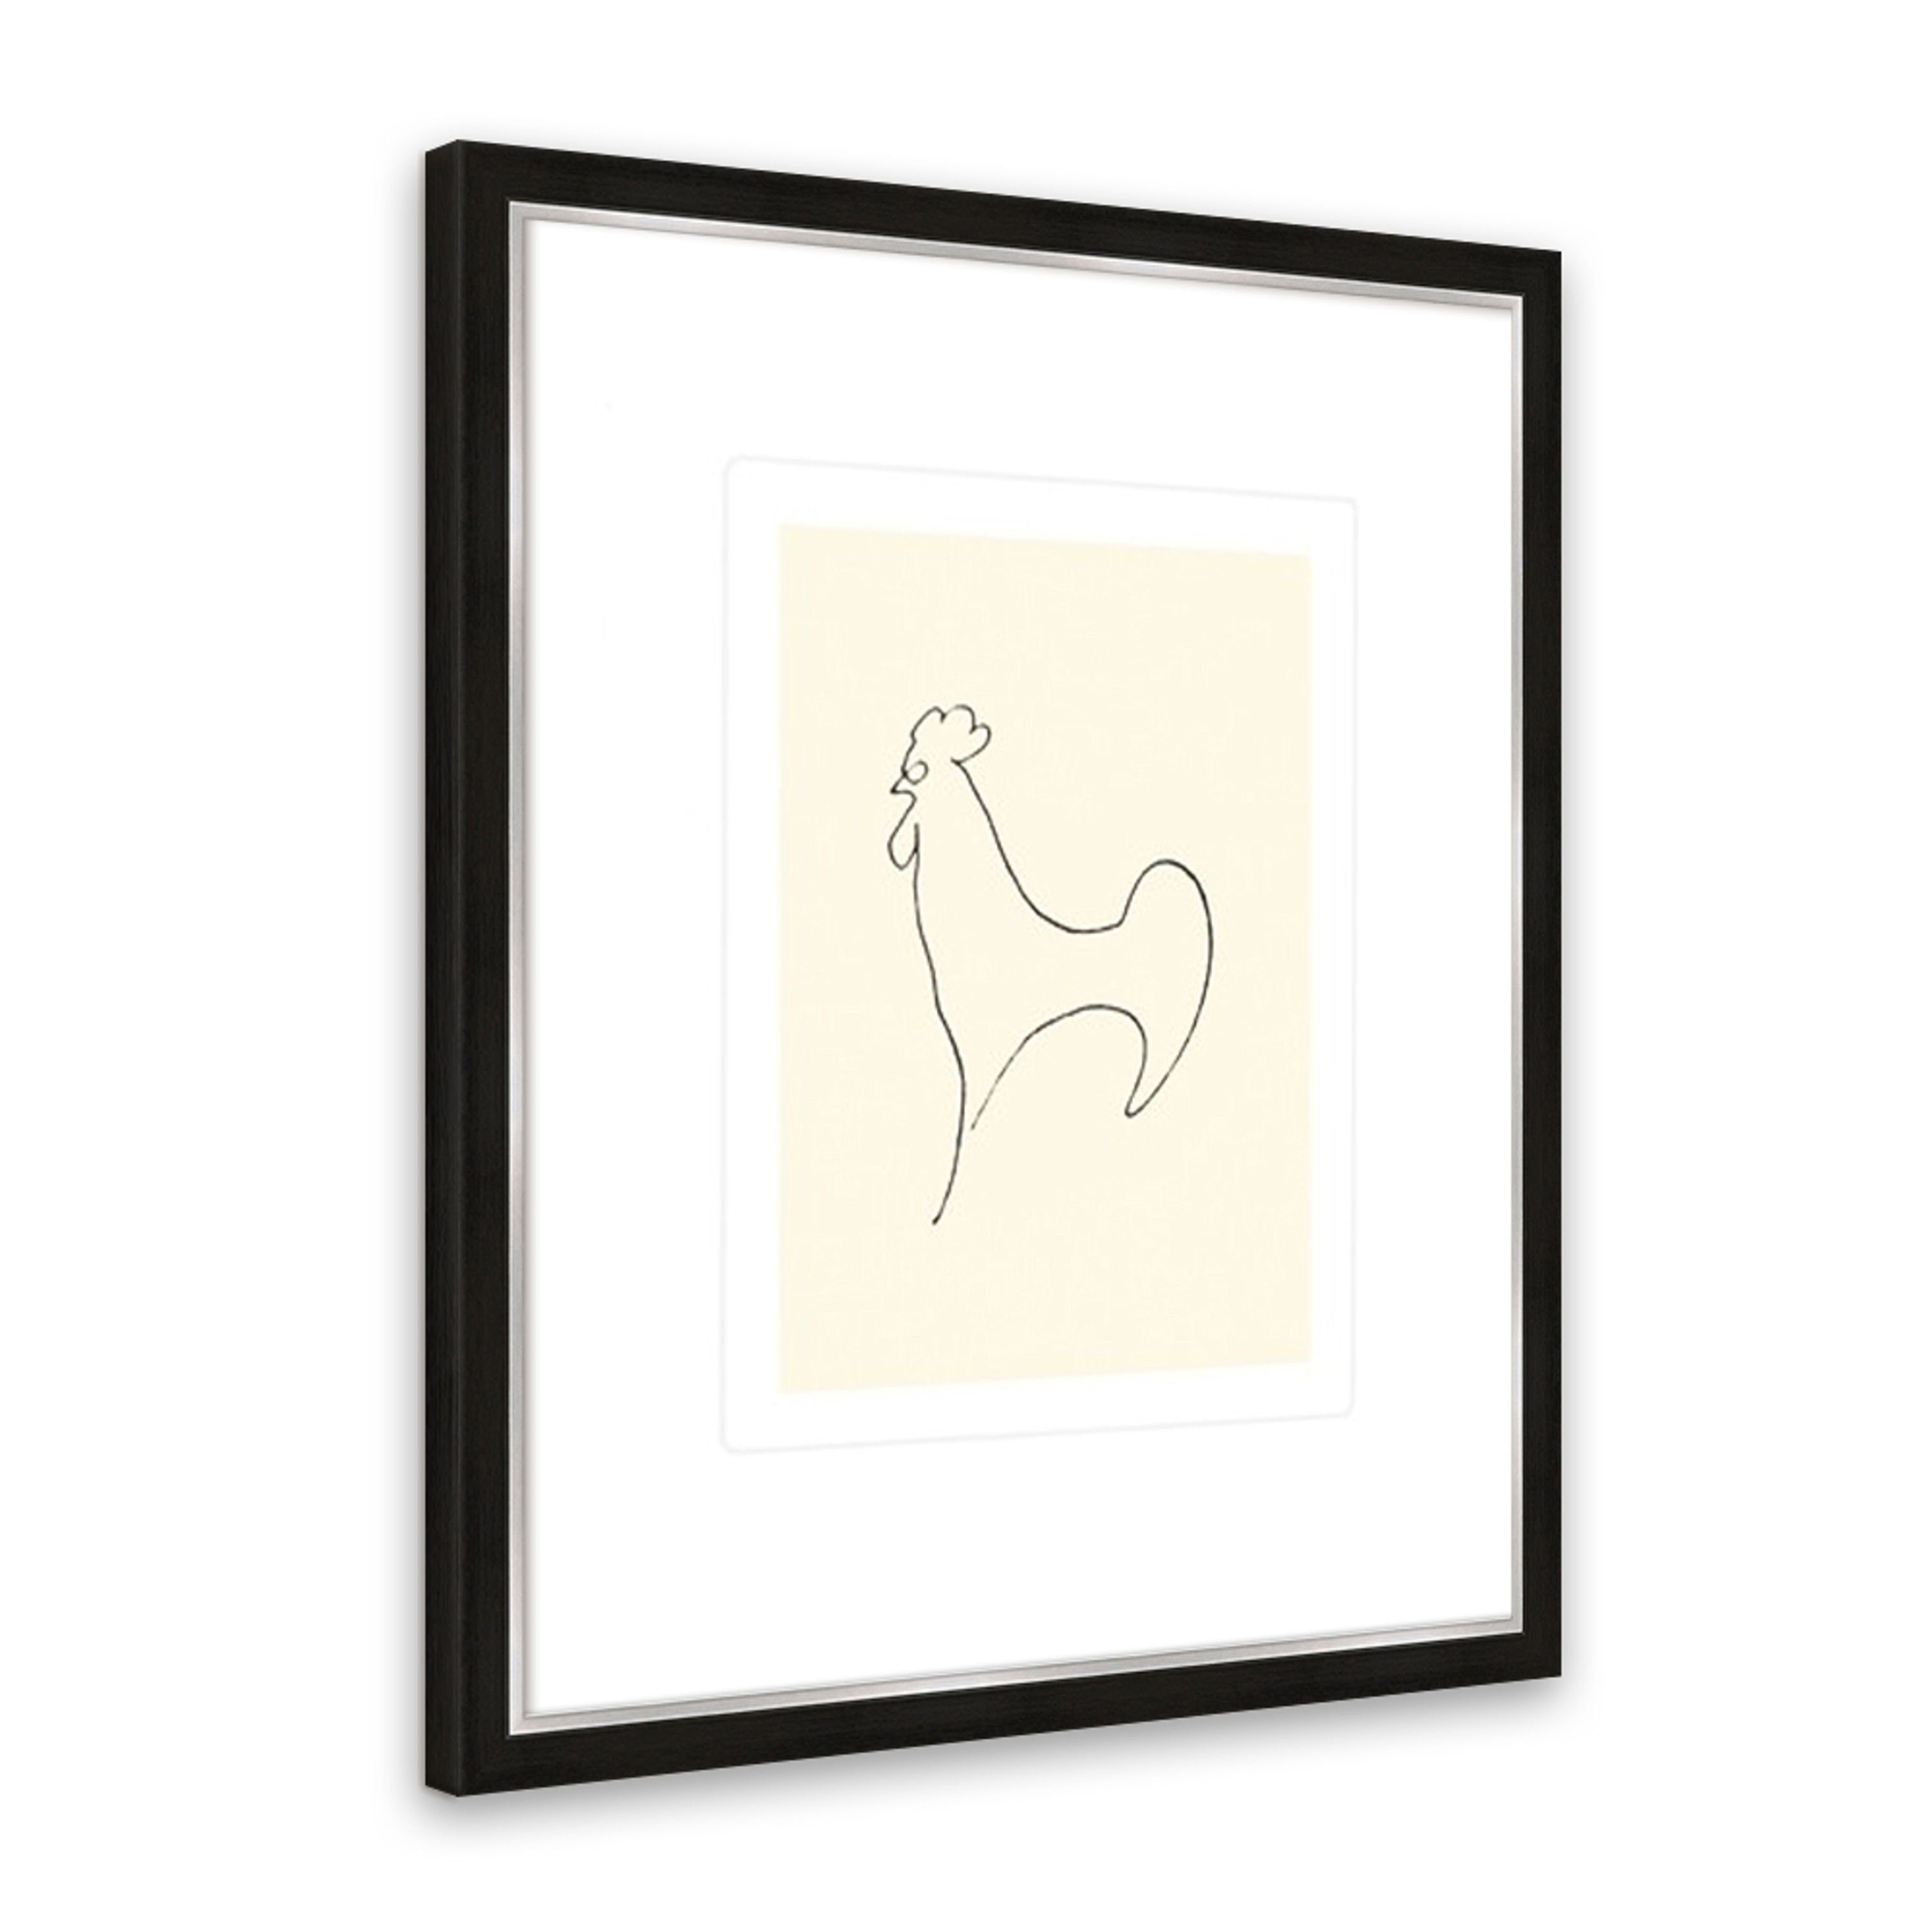 Picasso mit Wandbild mit Rahmen / Rahmen Bild 53x63cm Poster artissimo Pablo Bild gerahmt /